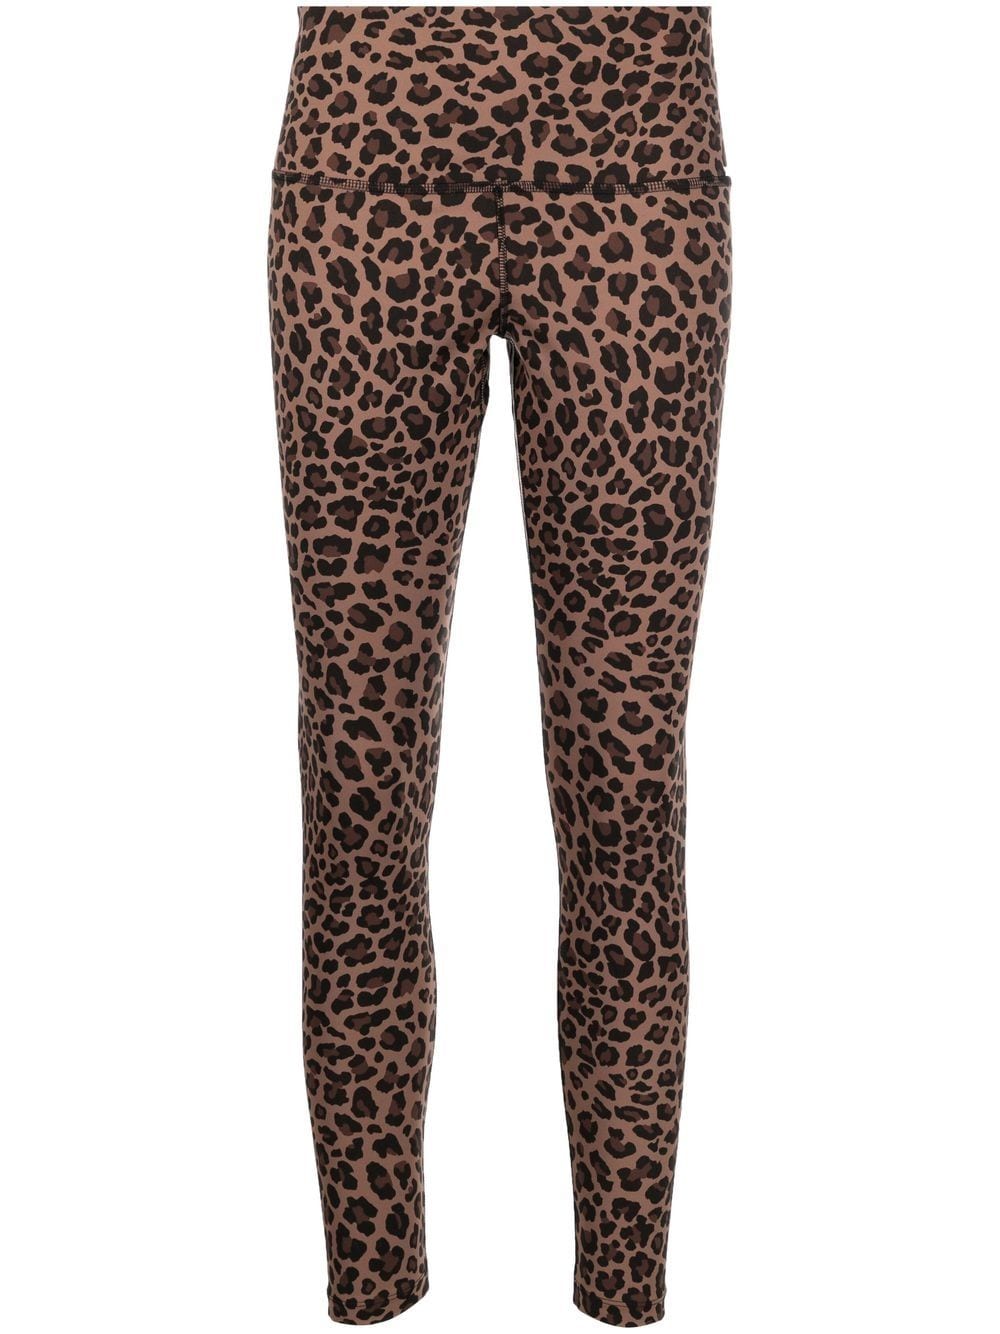 Nike leopard print leggings. No tags but never worn - Depop